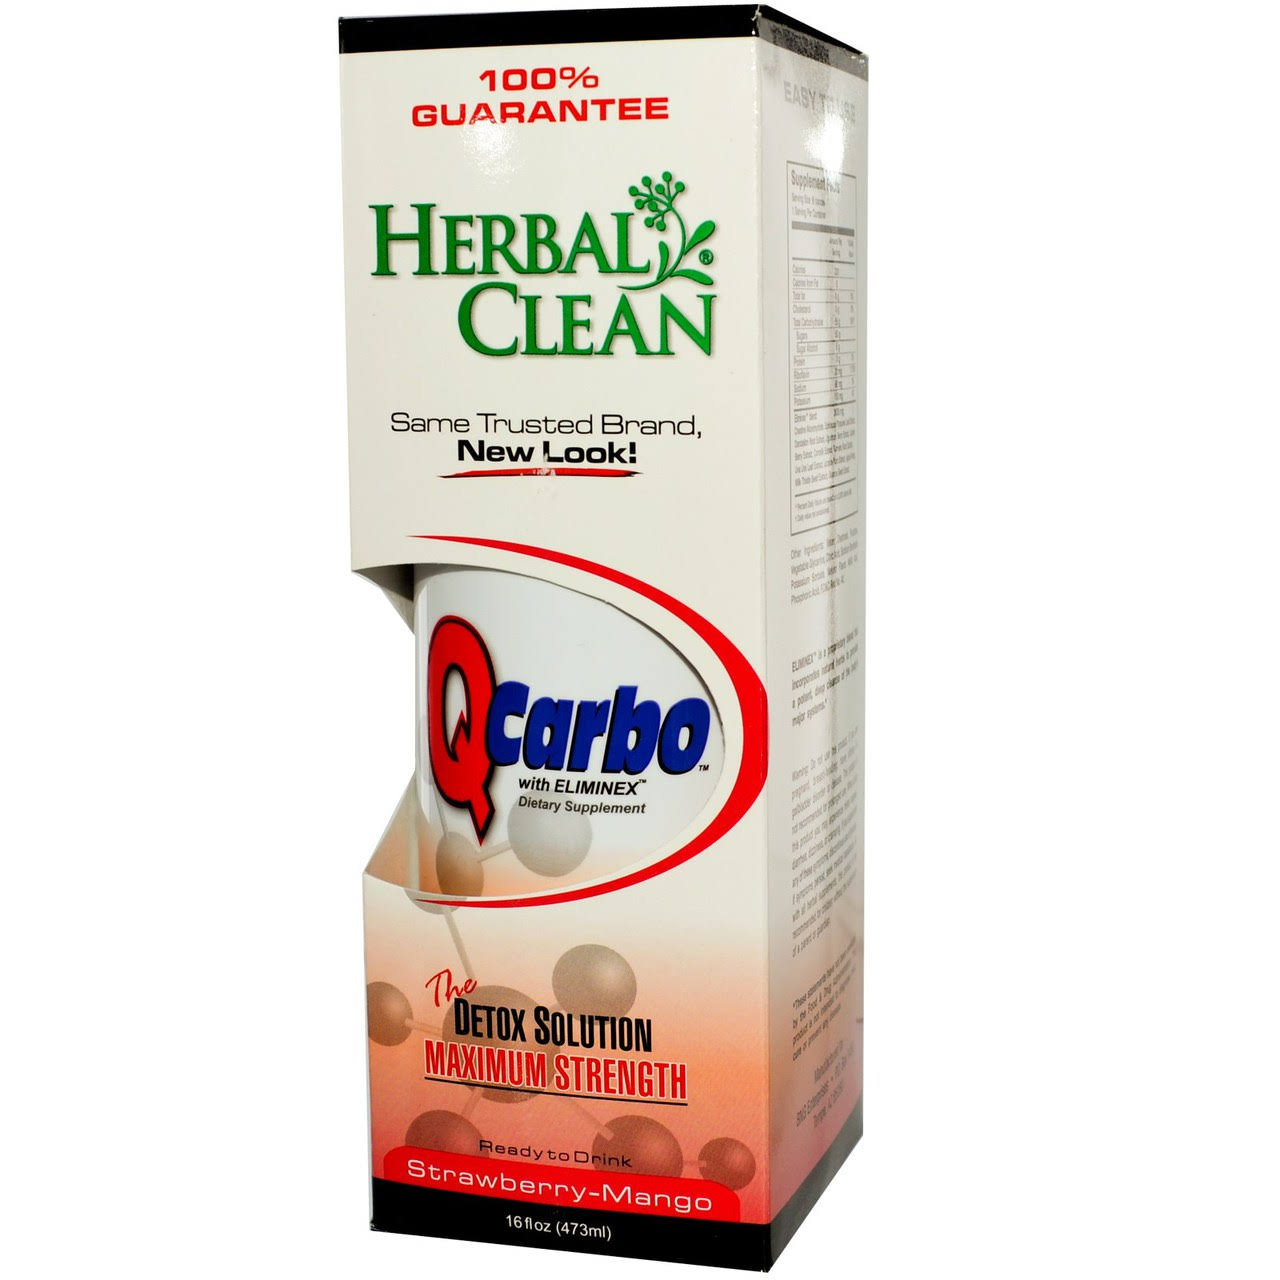 Herbal Clean QCarbo16 Mega Strength Cleansing Formula - Strawberry Mango, 16oz